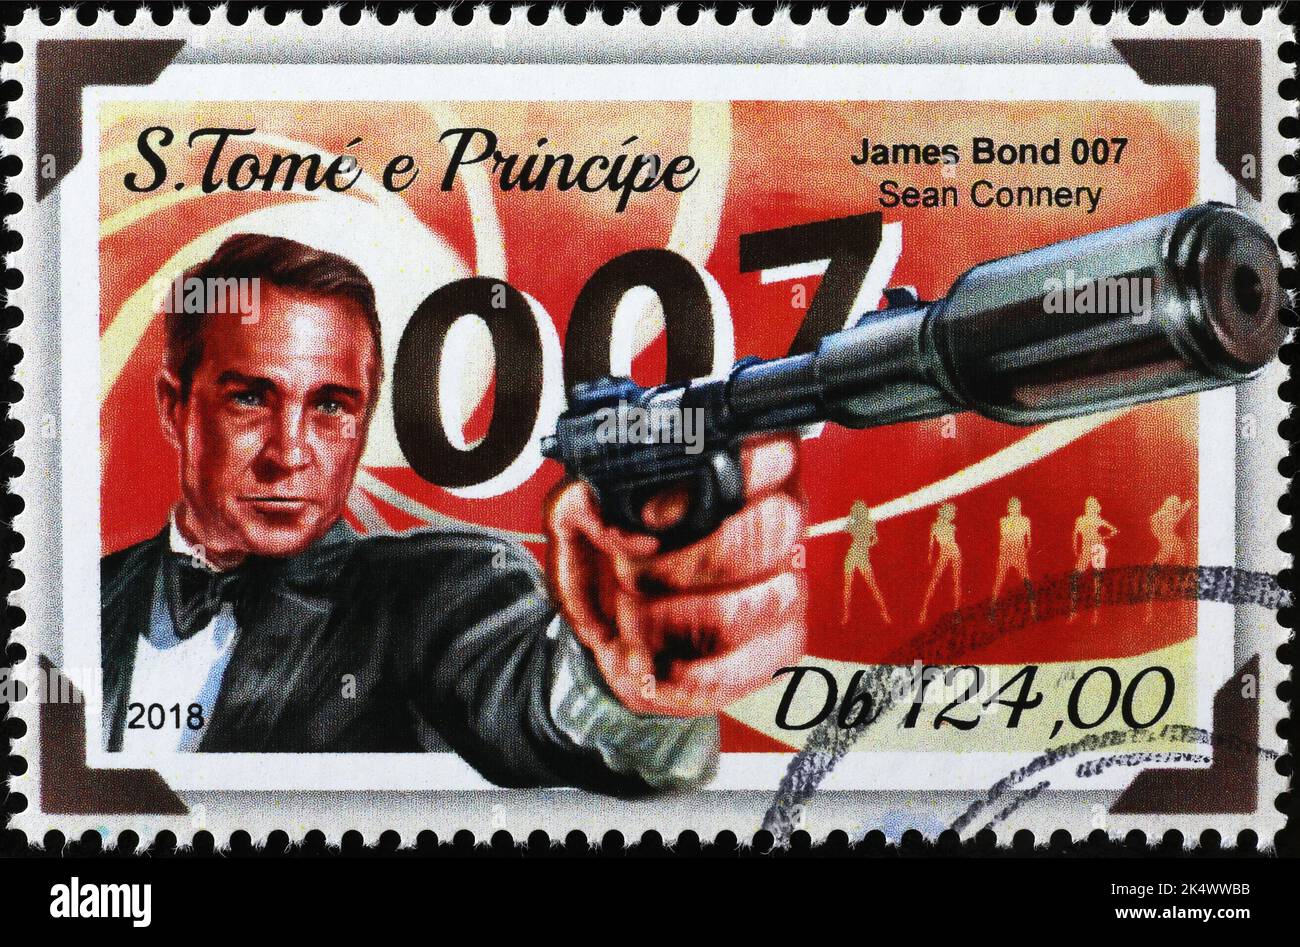 James Bond 007 on postage stamp Stock Photo